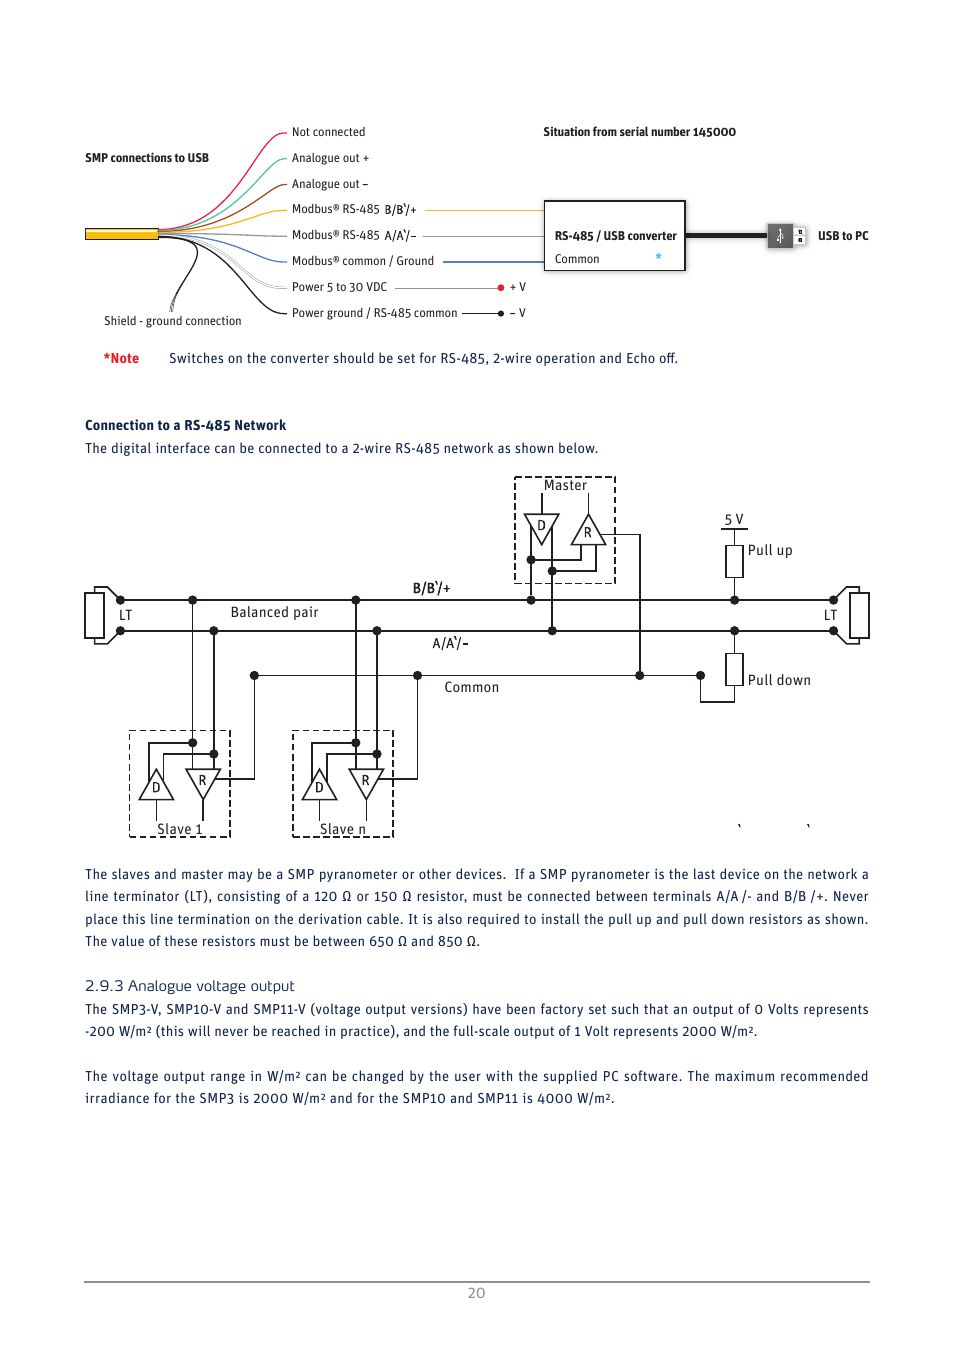 Analogue voltage output | Kipp&Zonen SMP3 Pyranometers User Manual ...